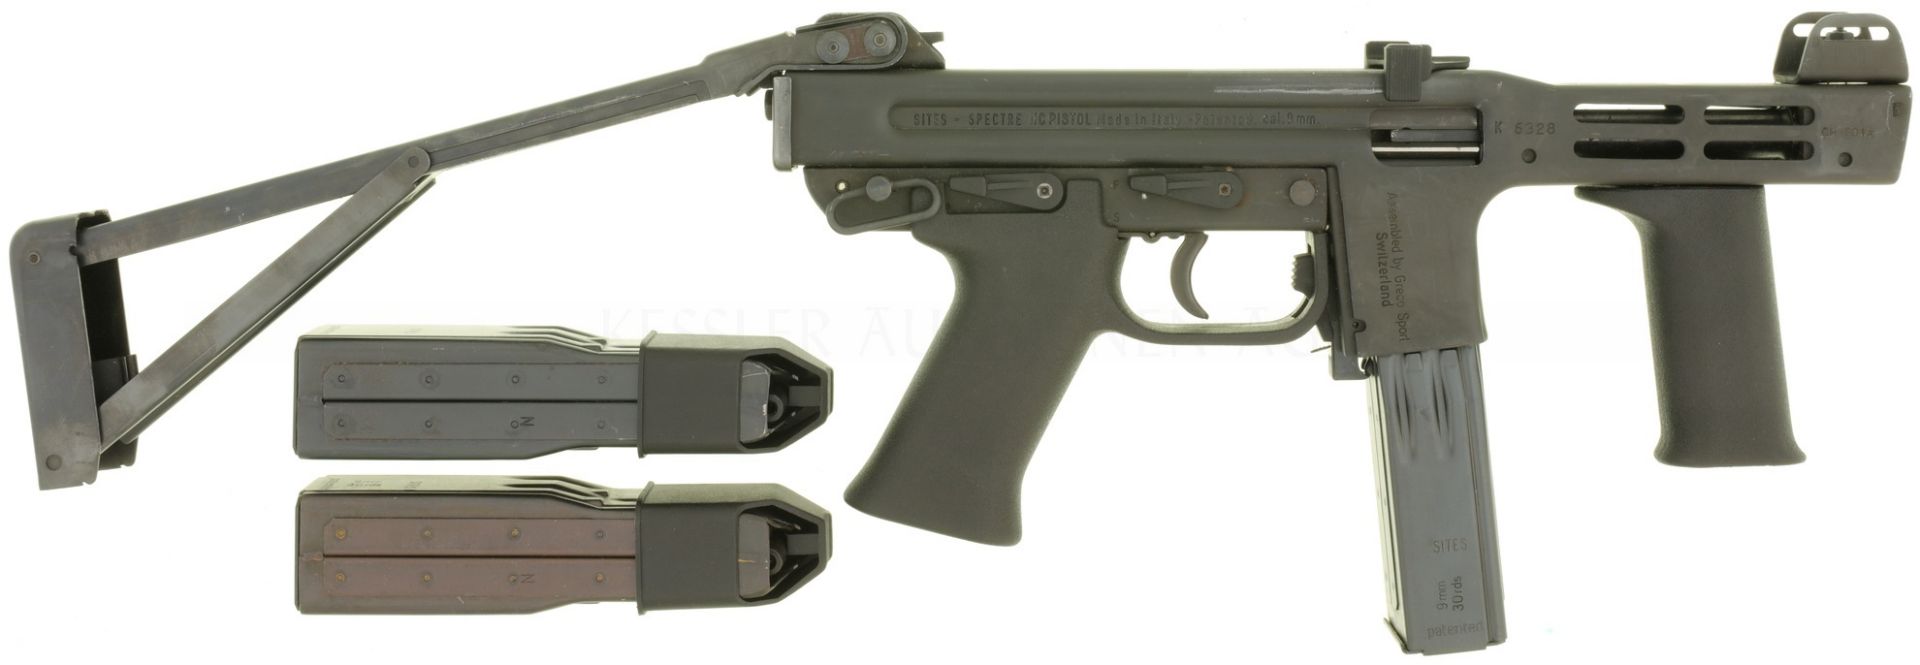 Selbstladebüchse, Sites Spectre HC Pistol, Kal. 9mmP